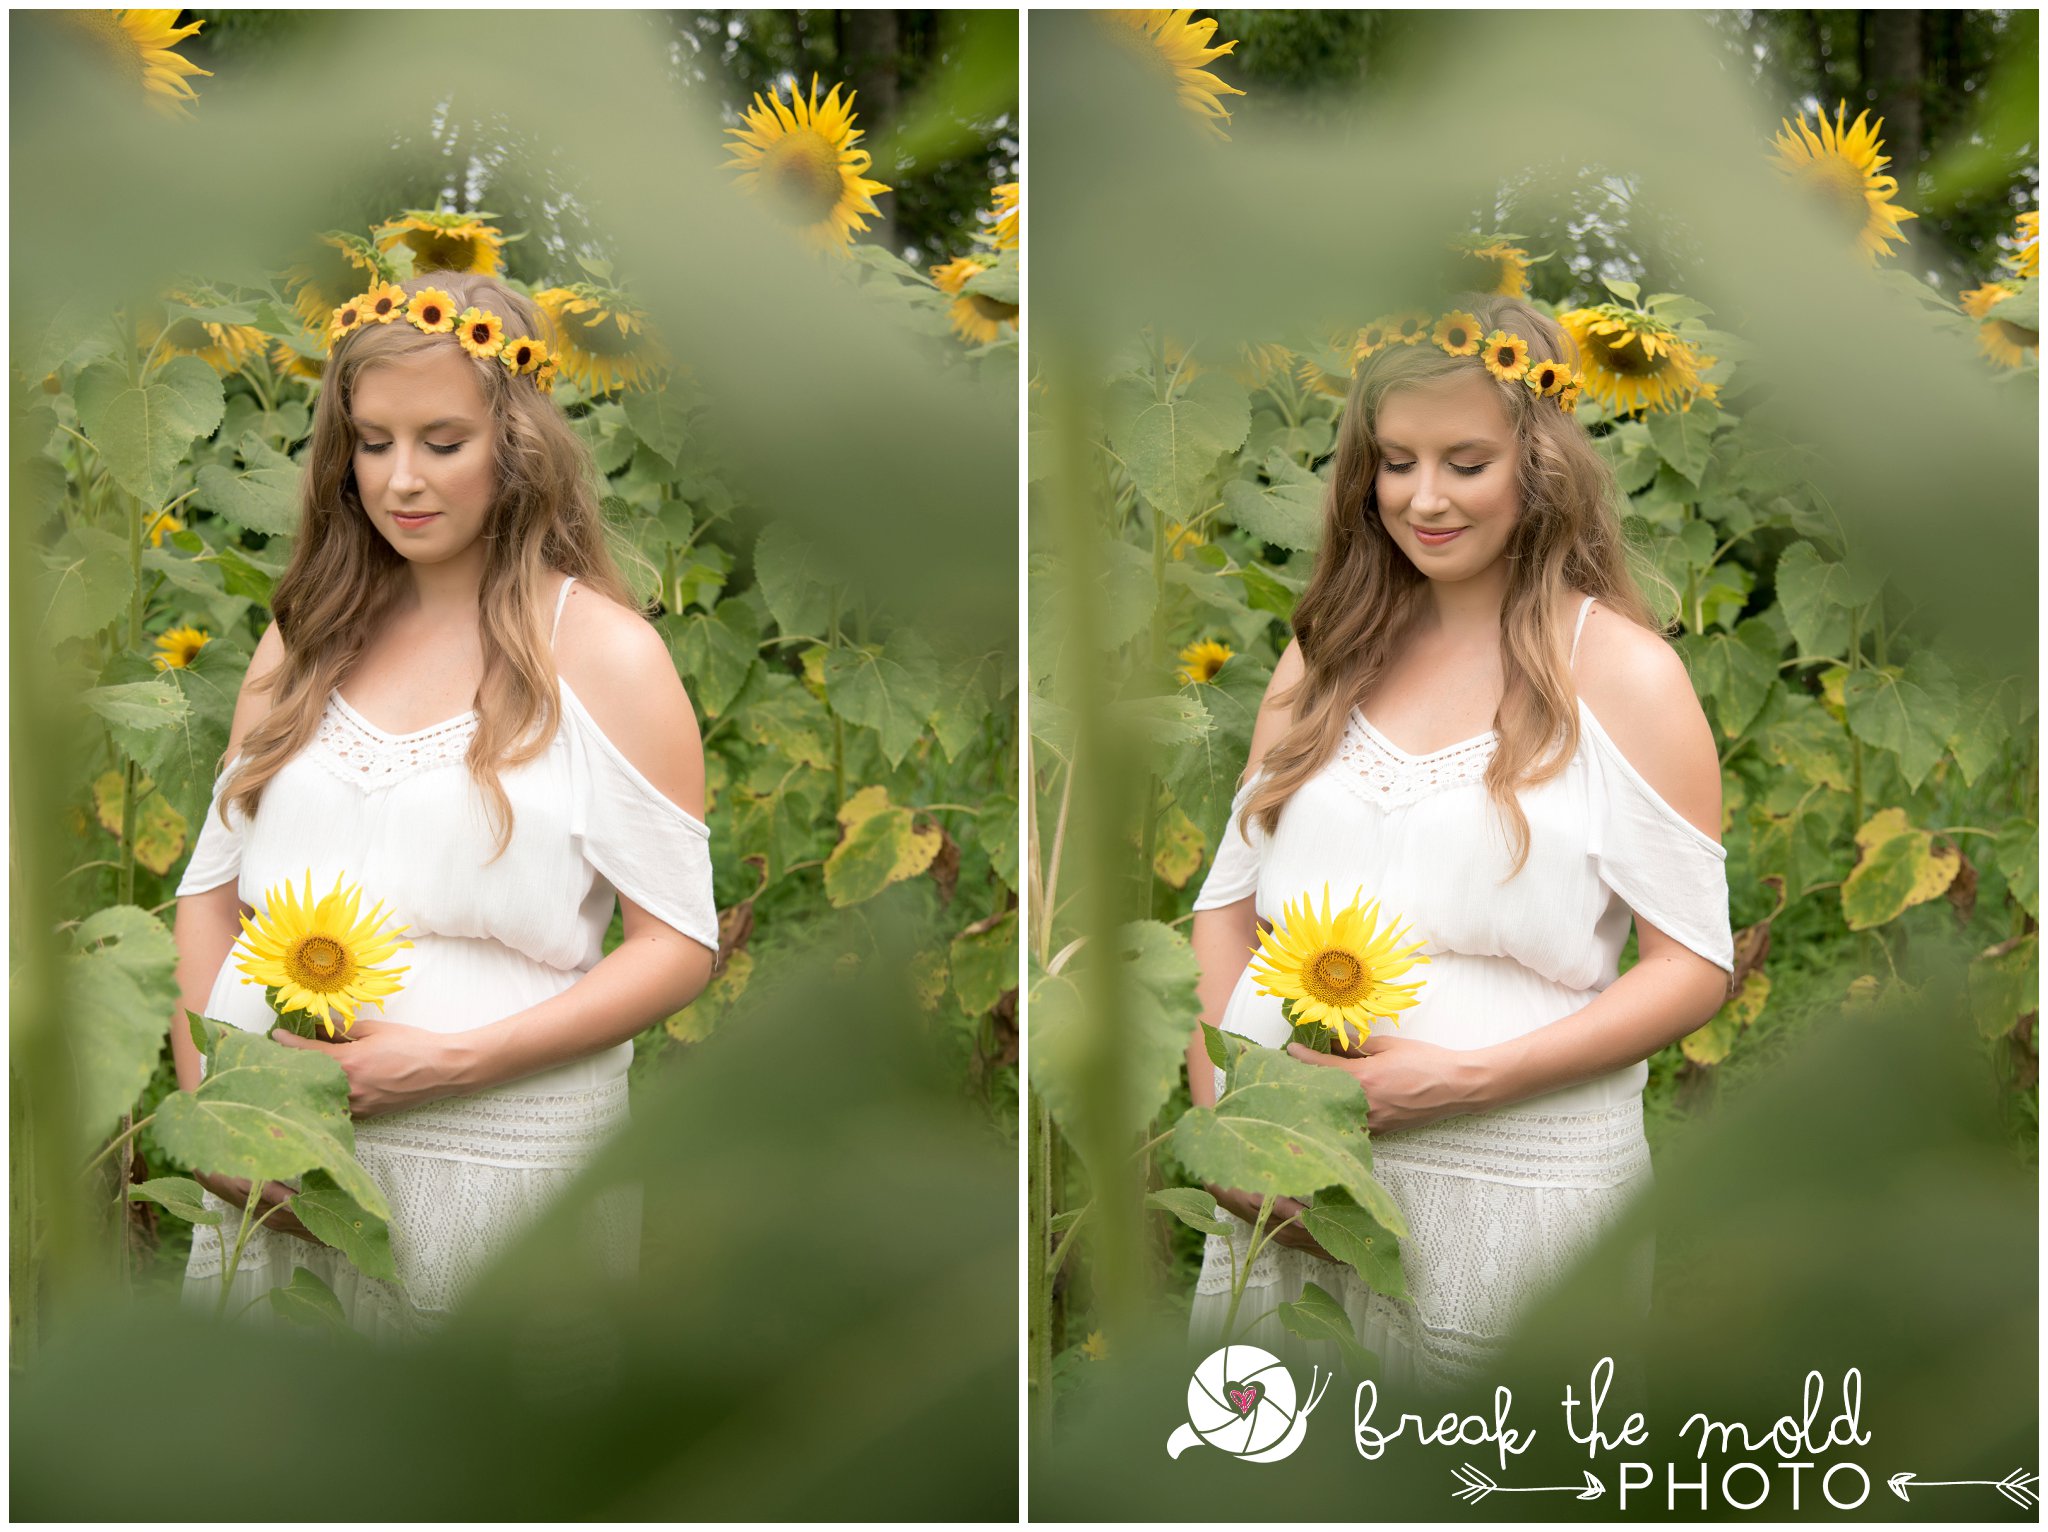 break-the-mold-photo-maternity-shoot-sunflowers_1249.jpg